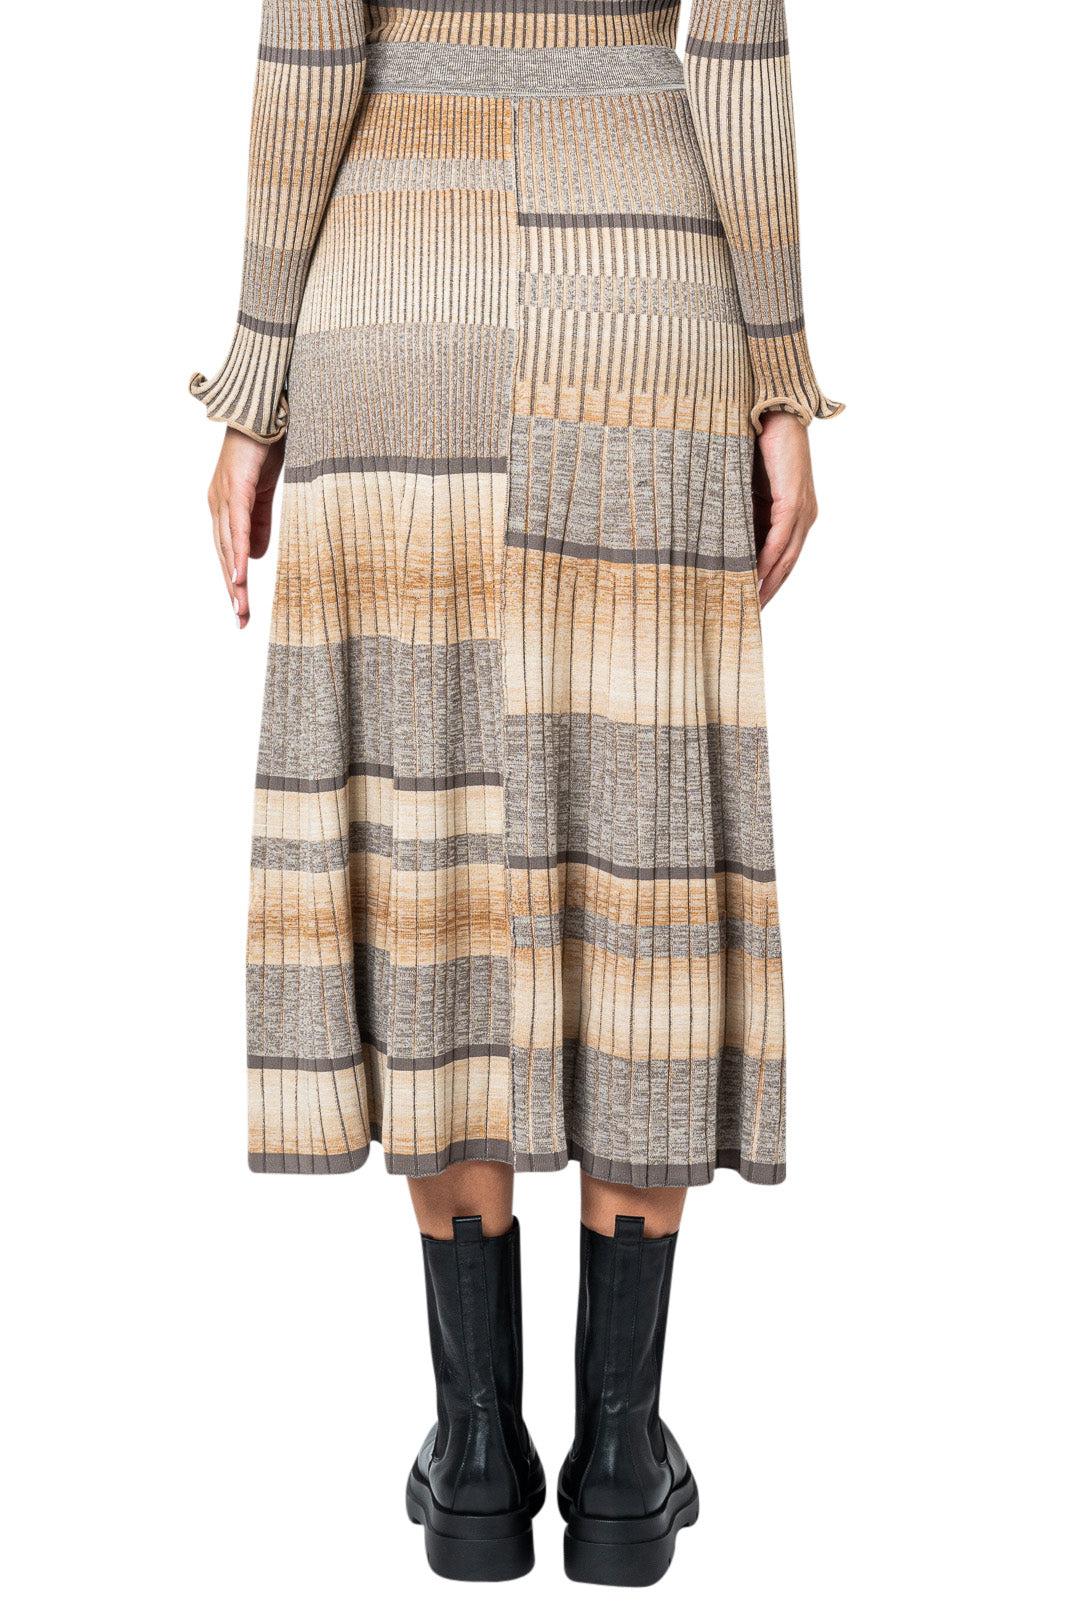 Simkhai-Ribbed striped midi skirt-421-3007-K-dgallerystore